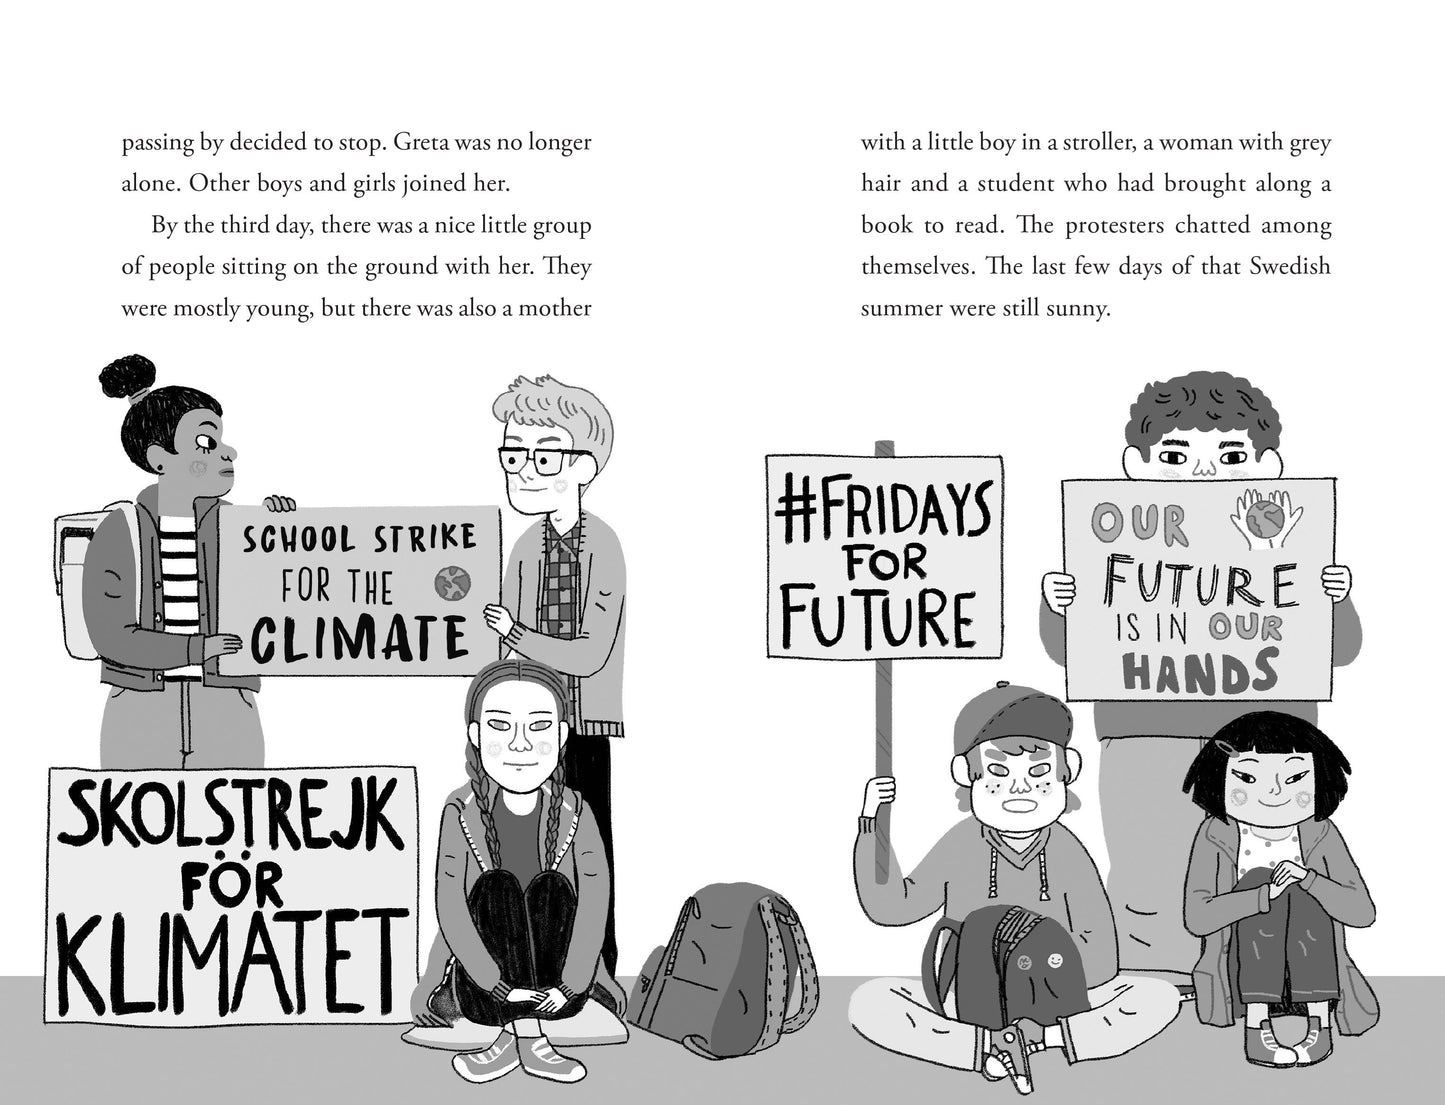 Greta's Story, Children's Book